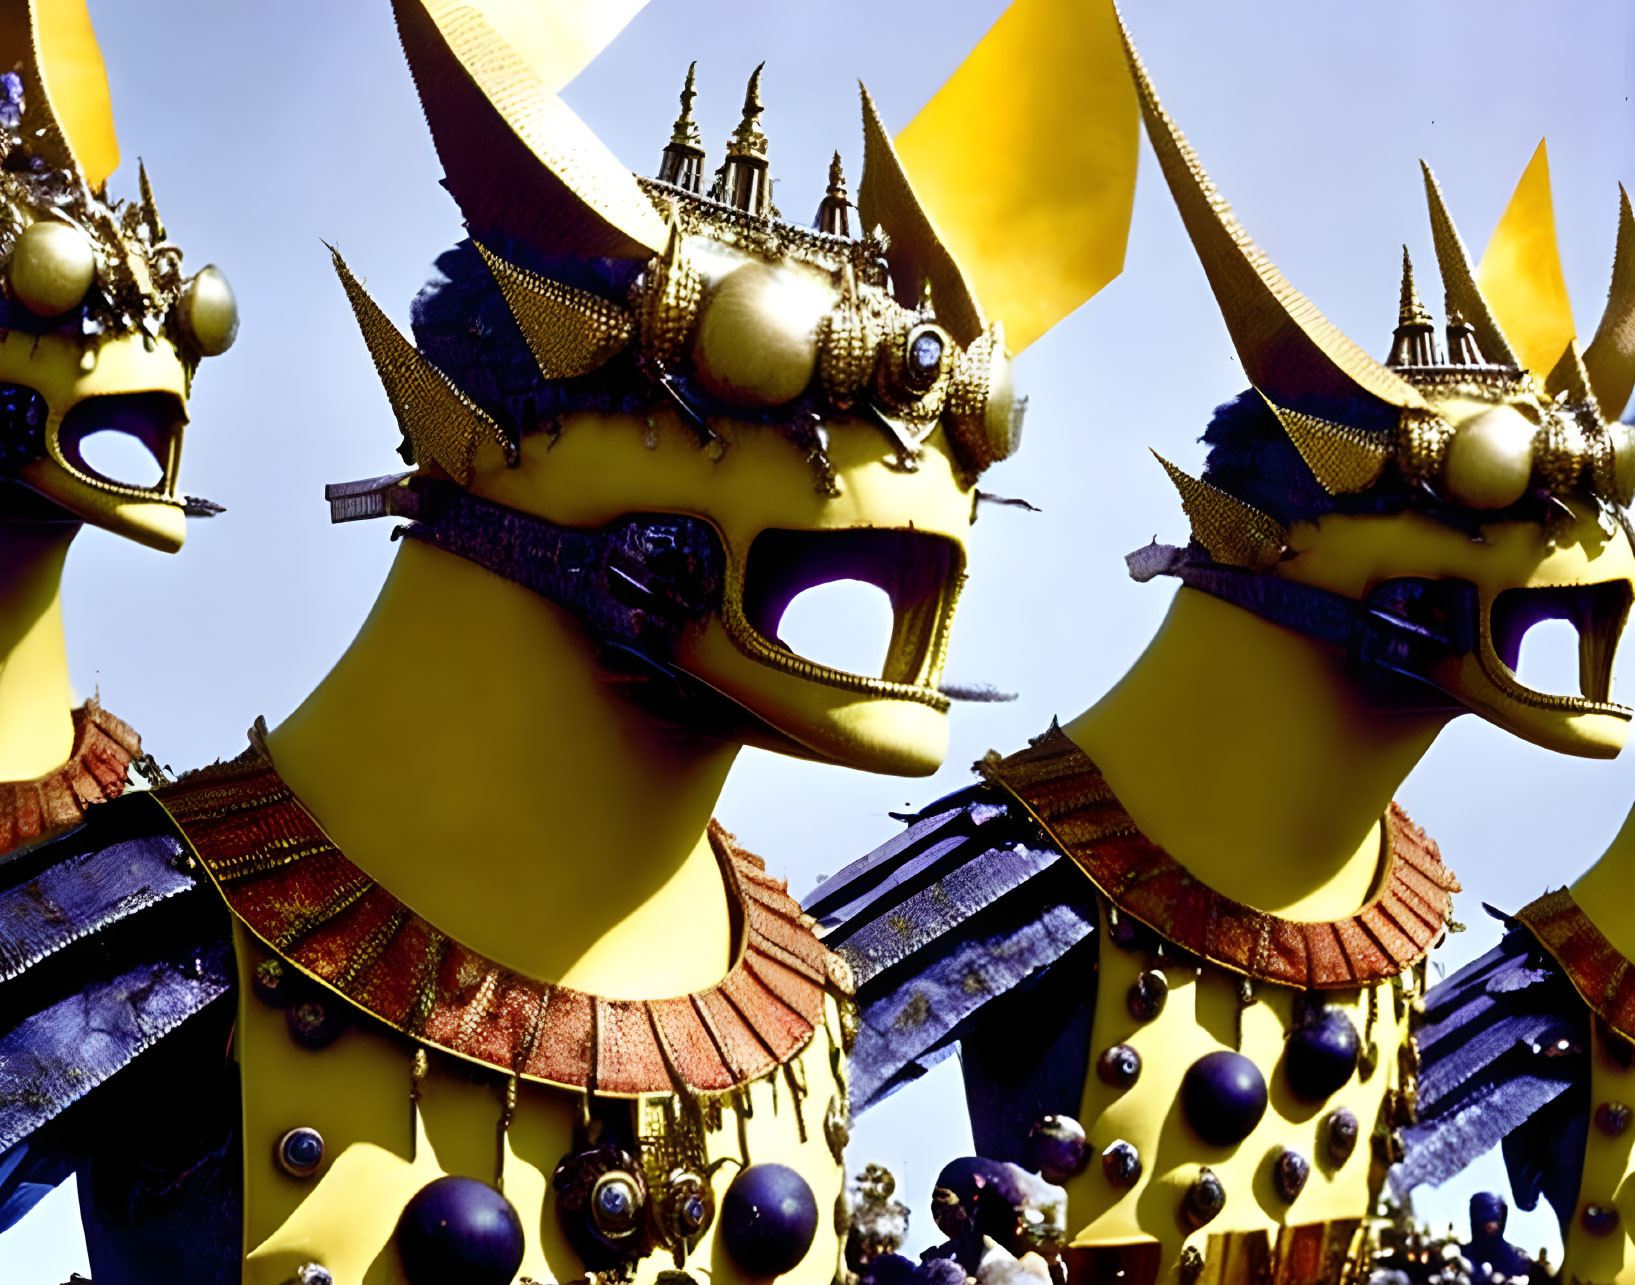 Elaborate golden masks on three figures against clear sky